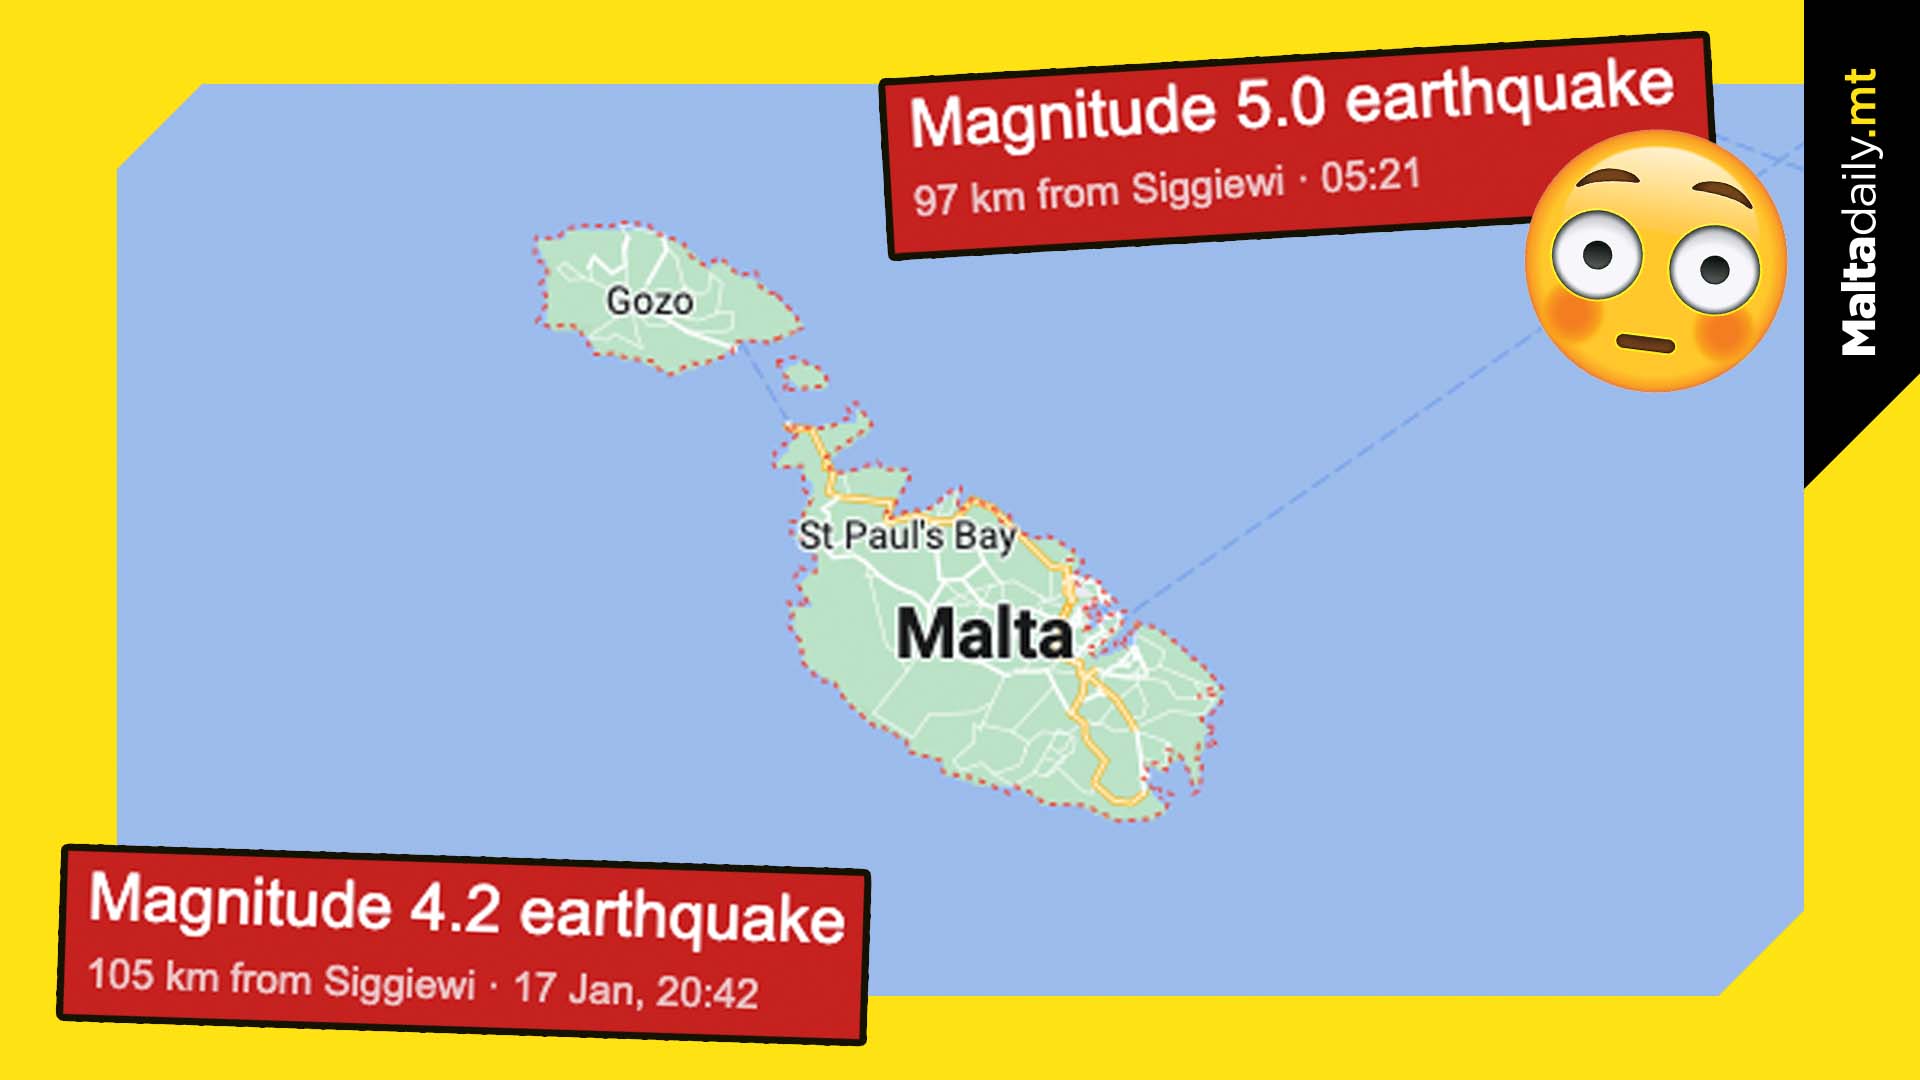 2 earthquakes registered off south western coast of Malta